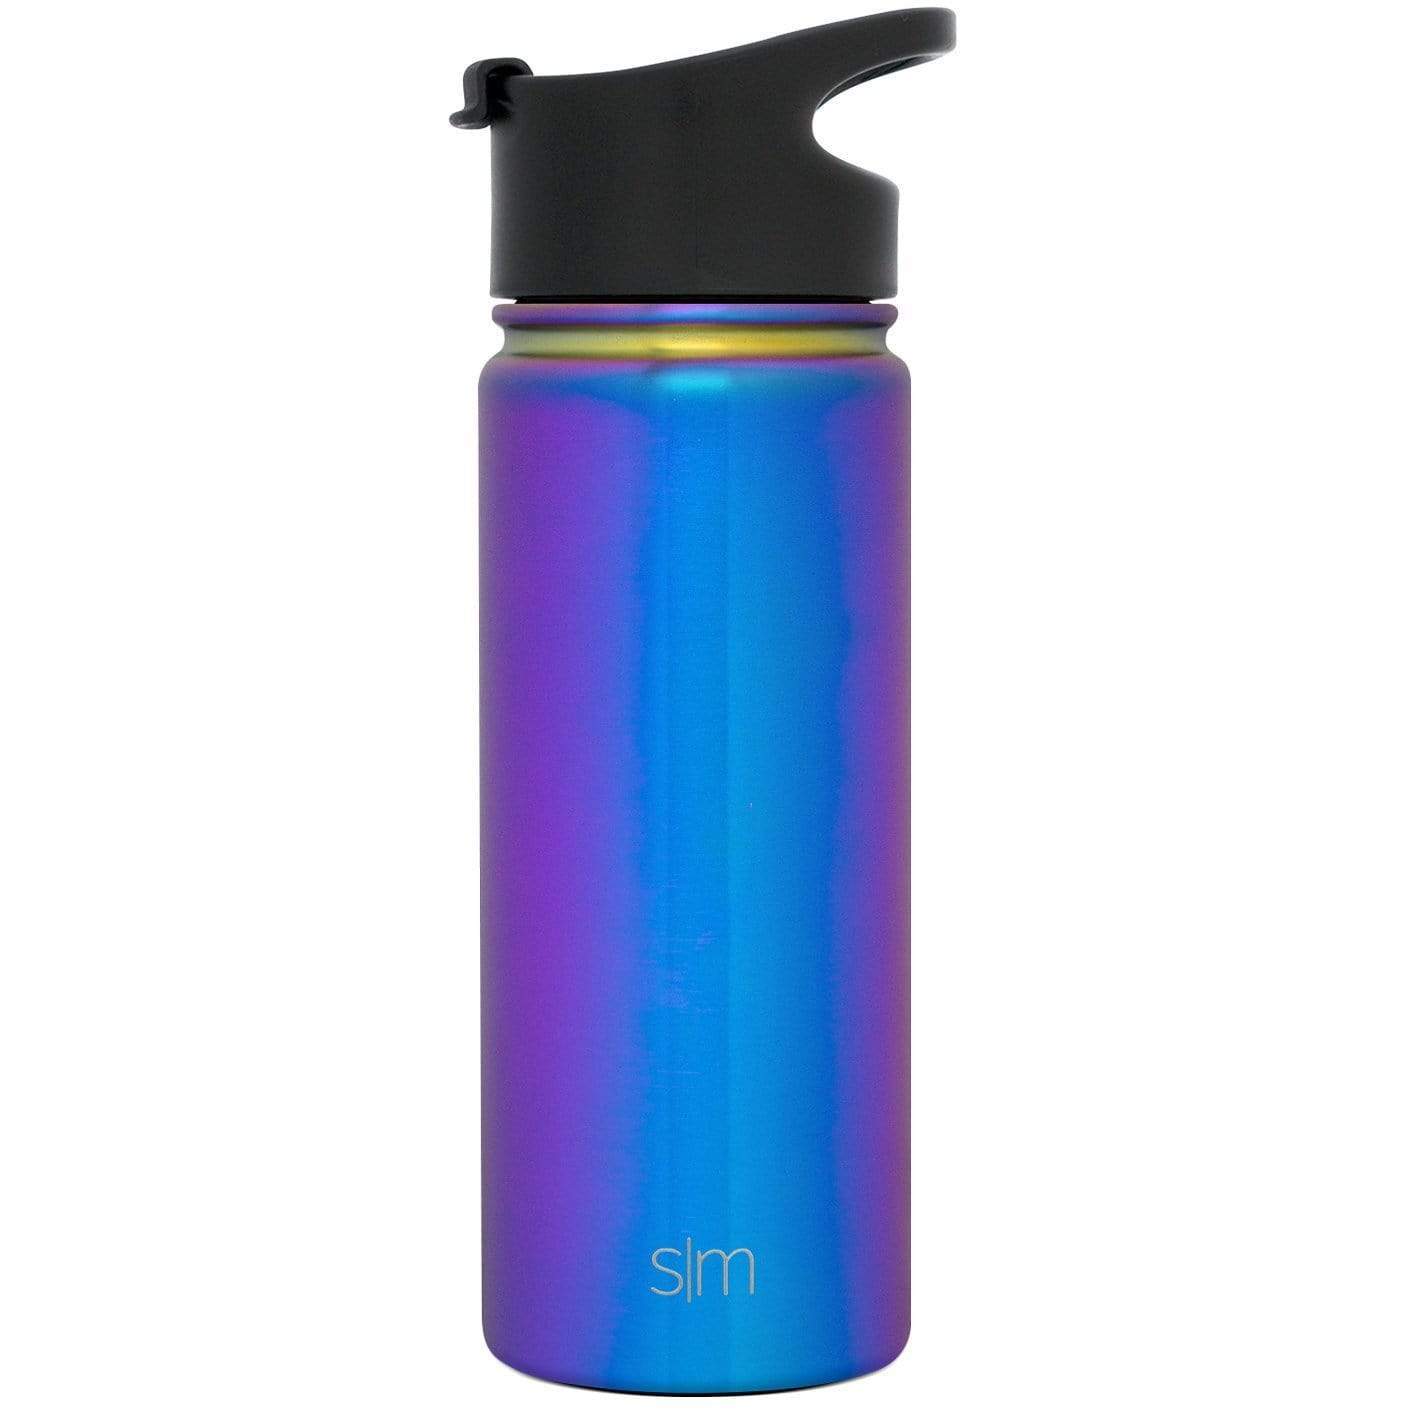 Simple Modern Summit Water Bottle Lid - Flip Lid with Handle